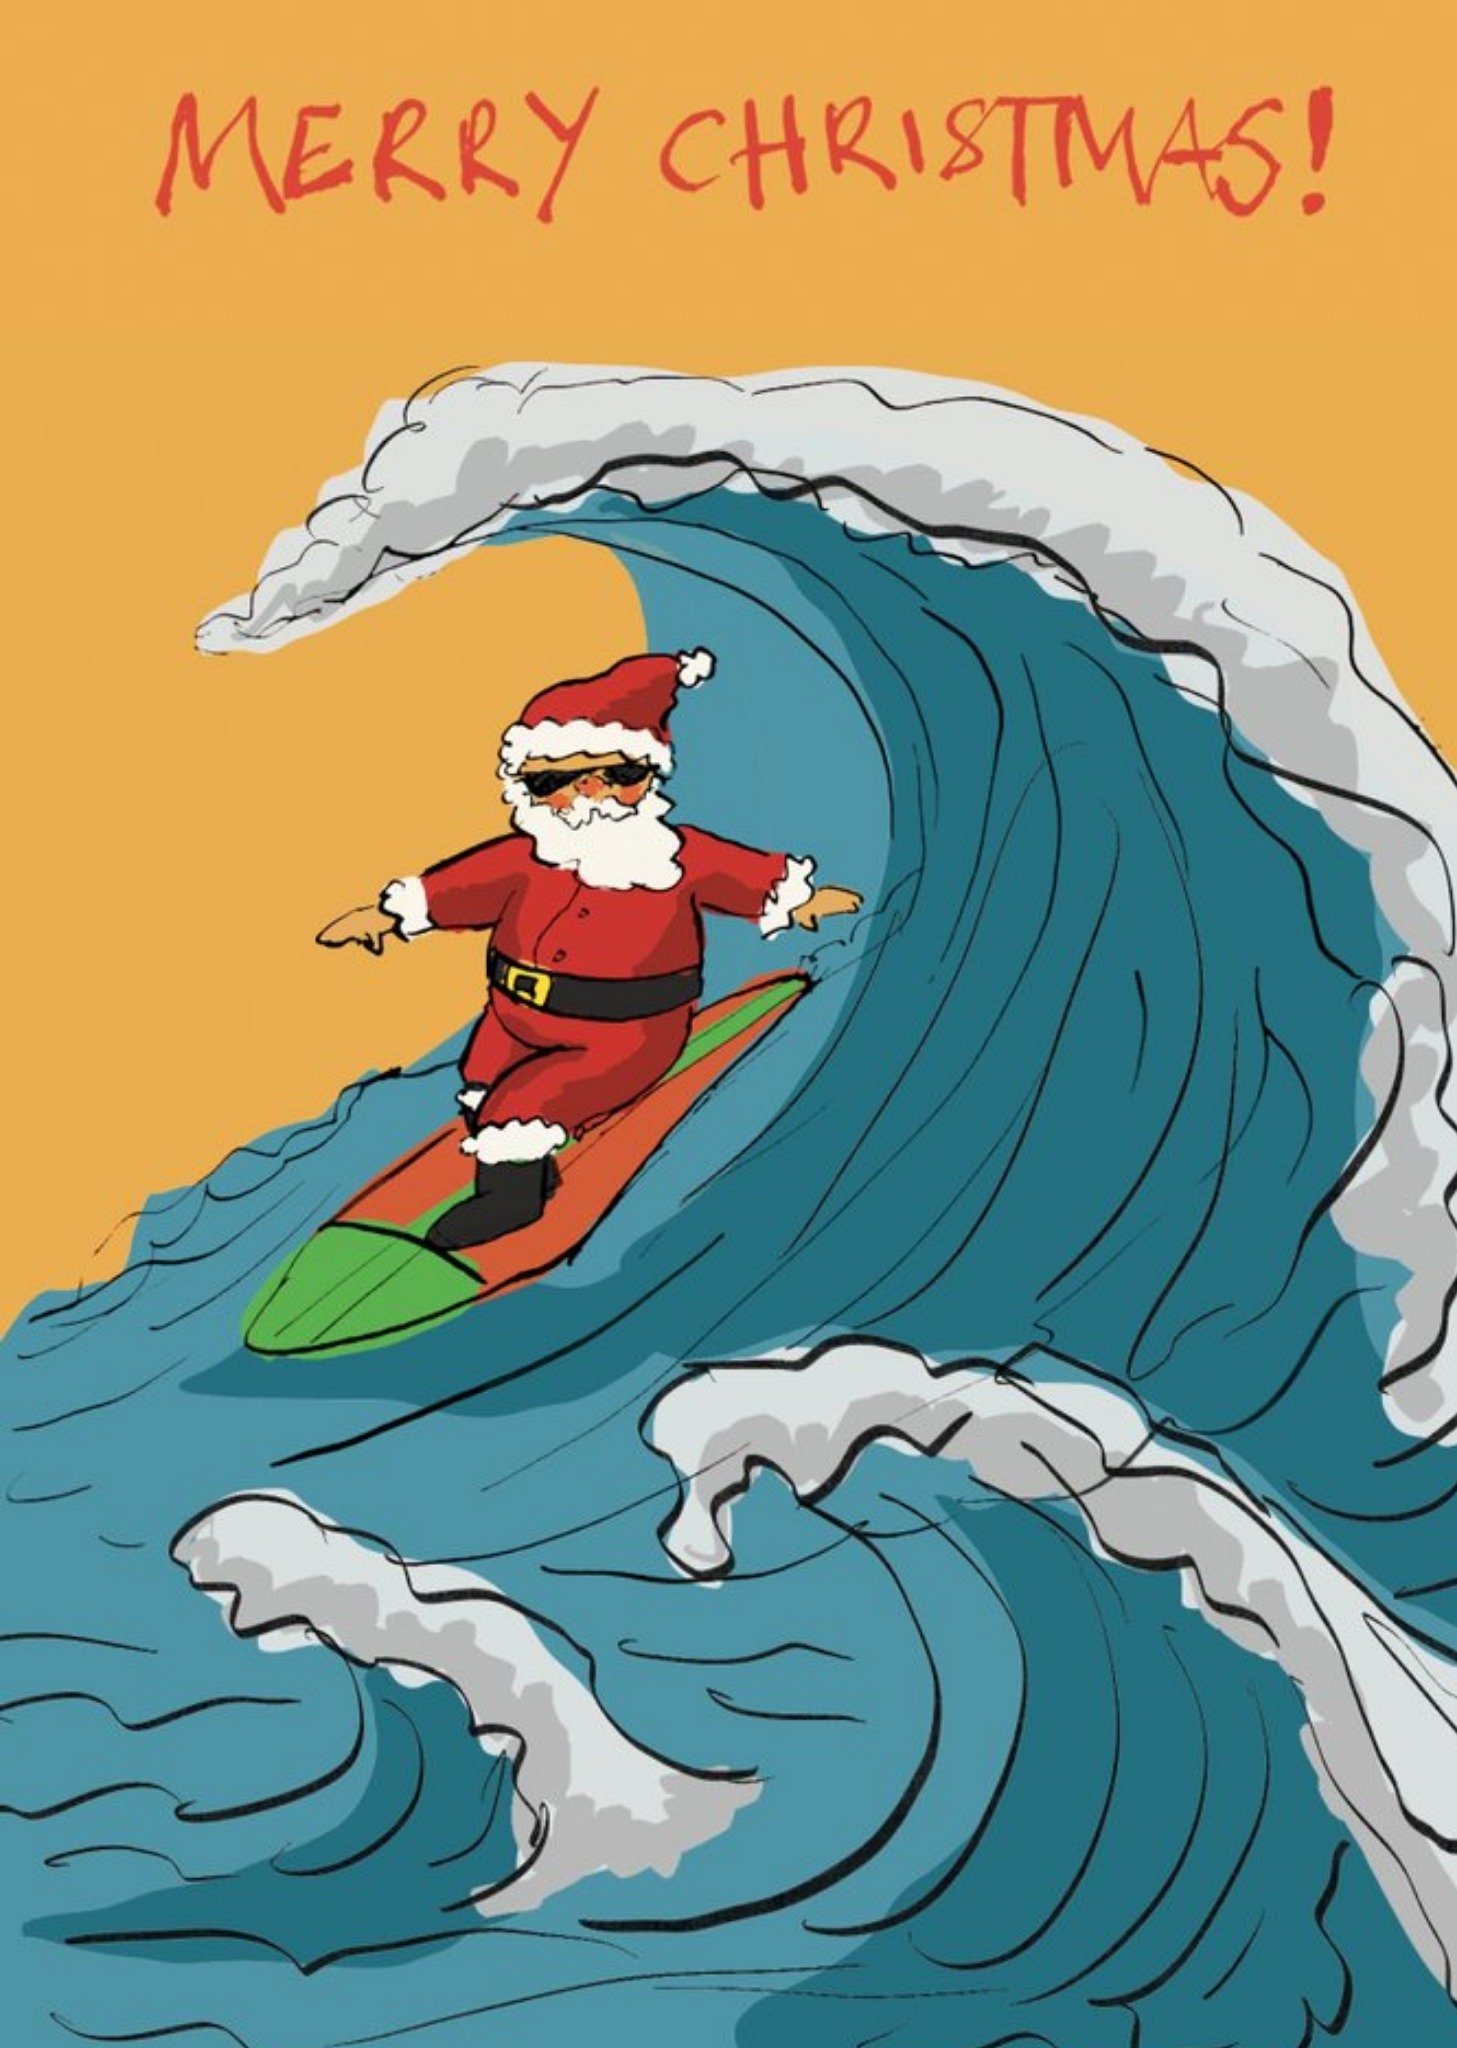 Friends Poet And Painter Surfing Illustration Australia Christmas Card Ecard